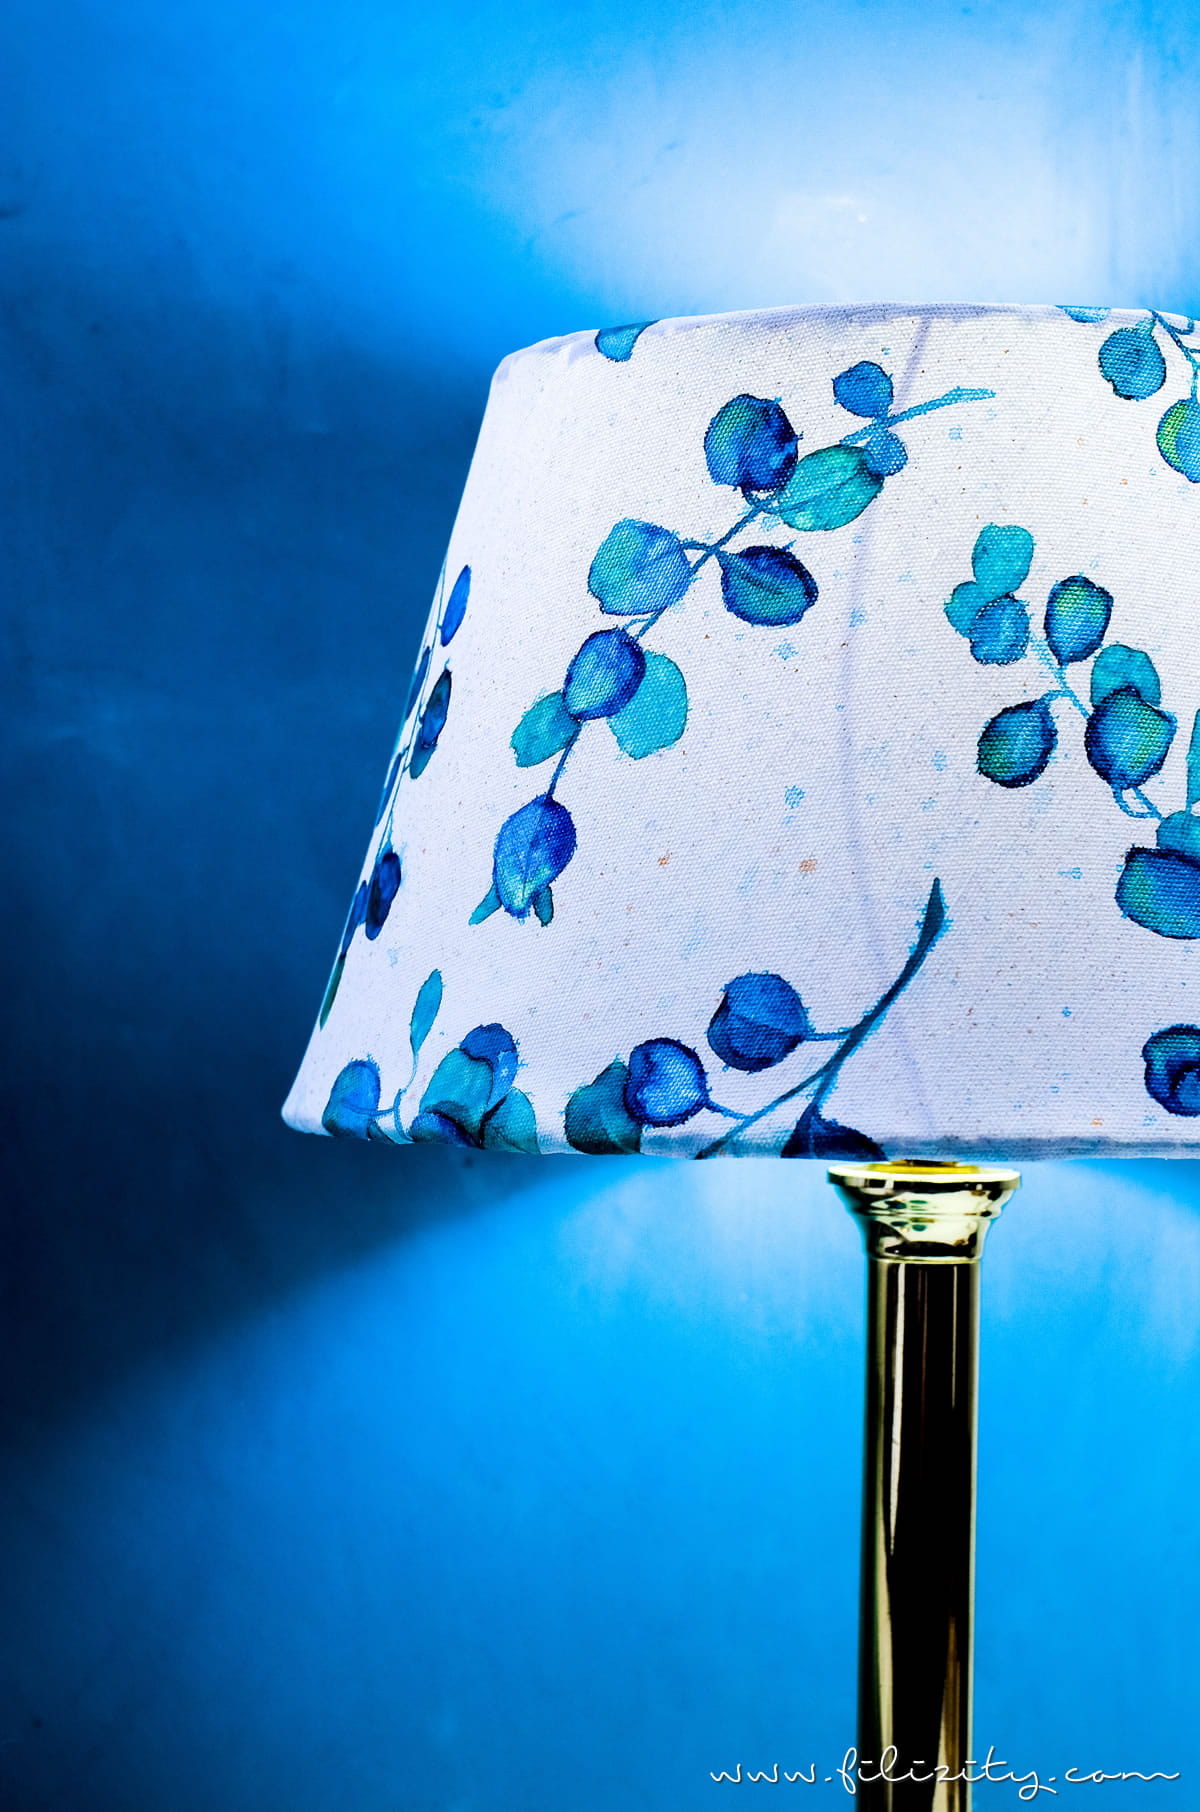 DIY Lampenschirm basteln aus Leinwand mit Aquarell-Muster | Upcycling Deko: Lampenschirm wechseln | Filizity.com | DIY-Blog aus dem Rheinland #upcycling #aquarell